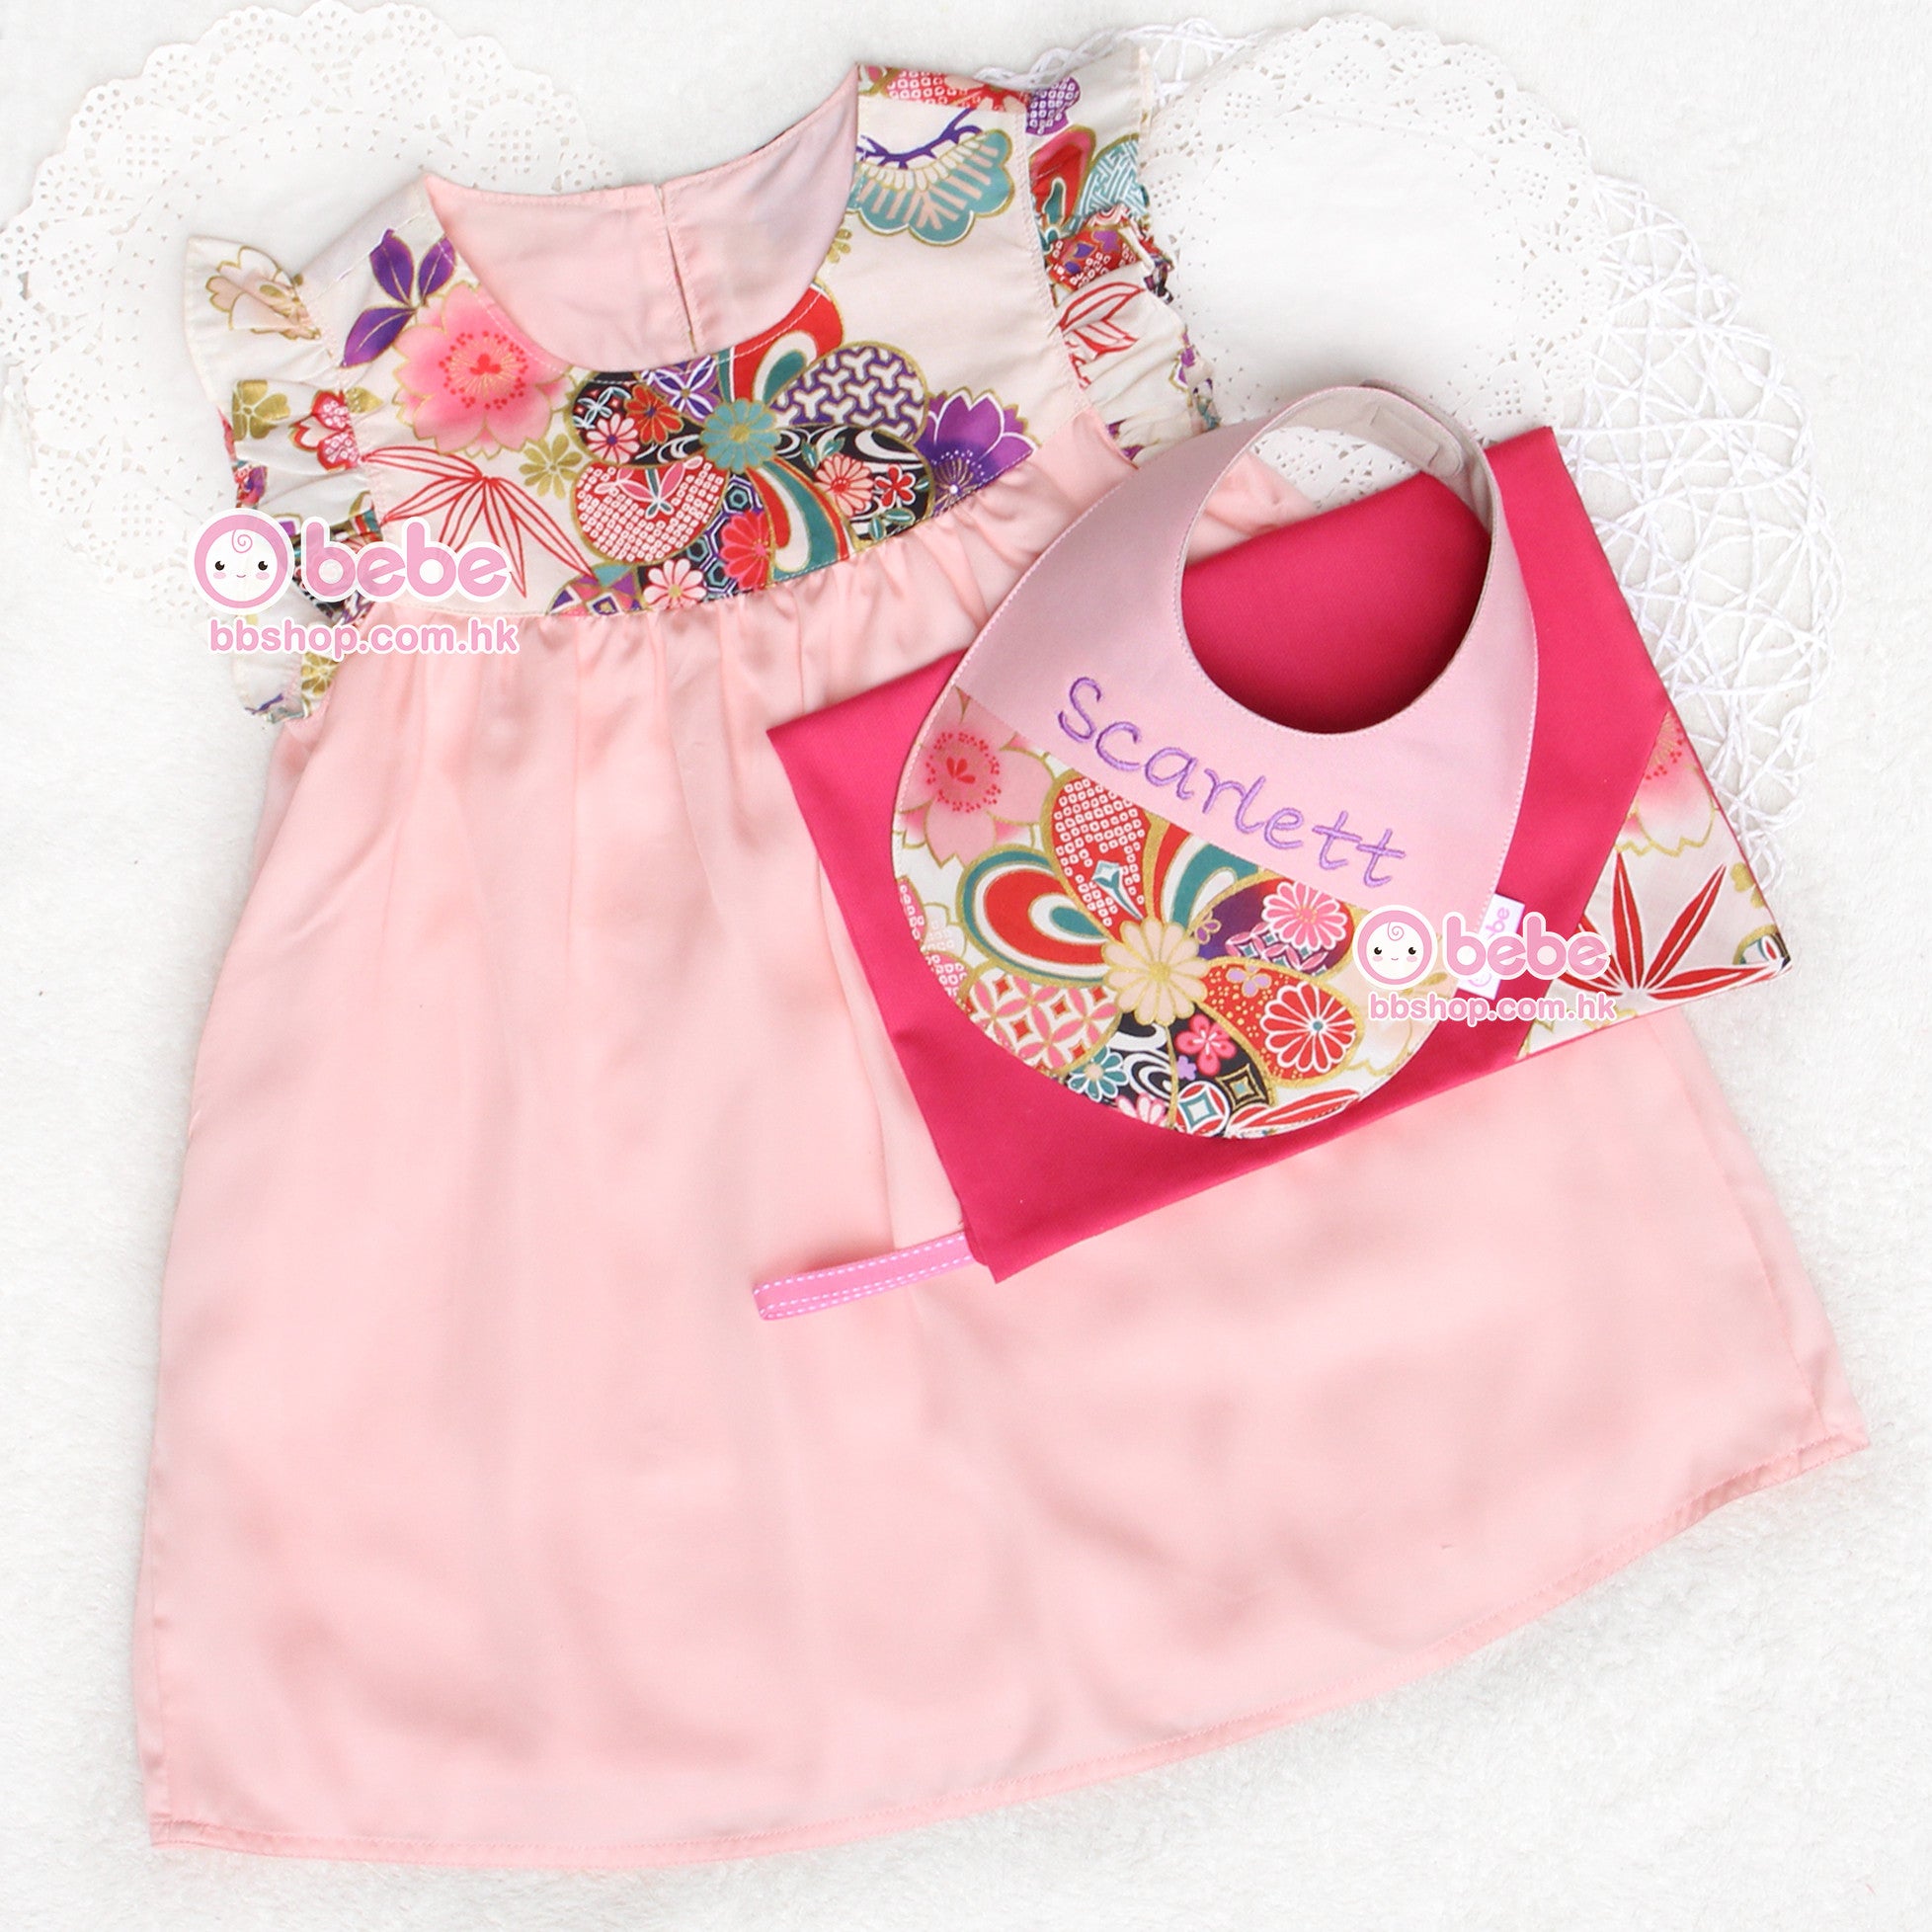 GS660 - 米色和風燙金繡名口水肩及上衣禮物套裝連手製禮物袋 Cream Japan Gilded Fabric Set (Girls' Top and Personalized Baby Bib with Handmade Gift Bag)